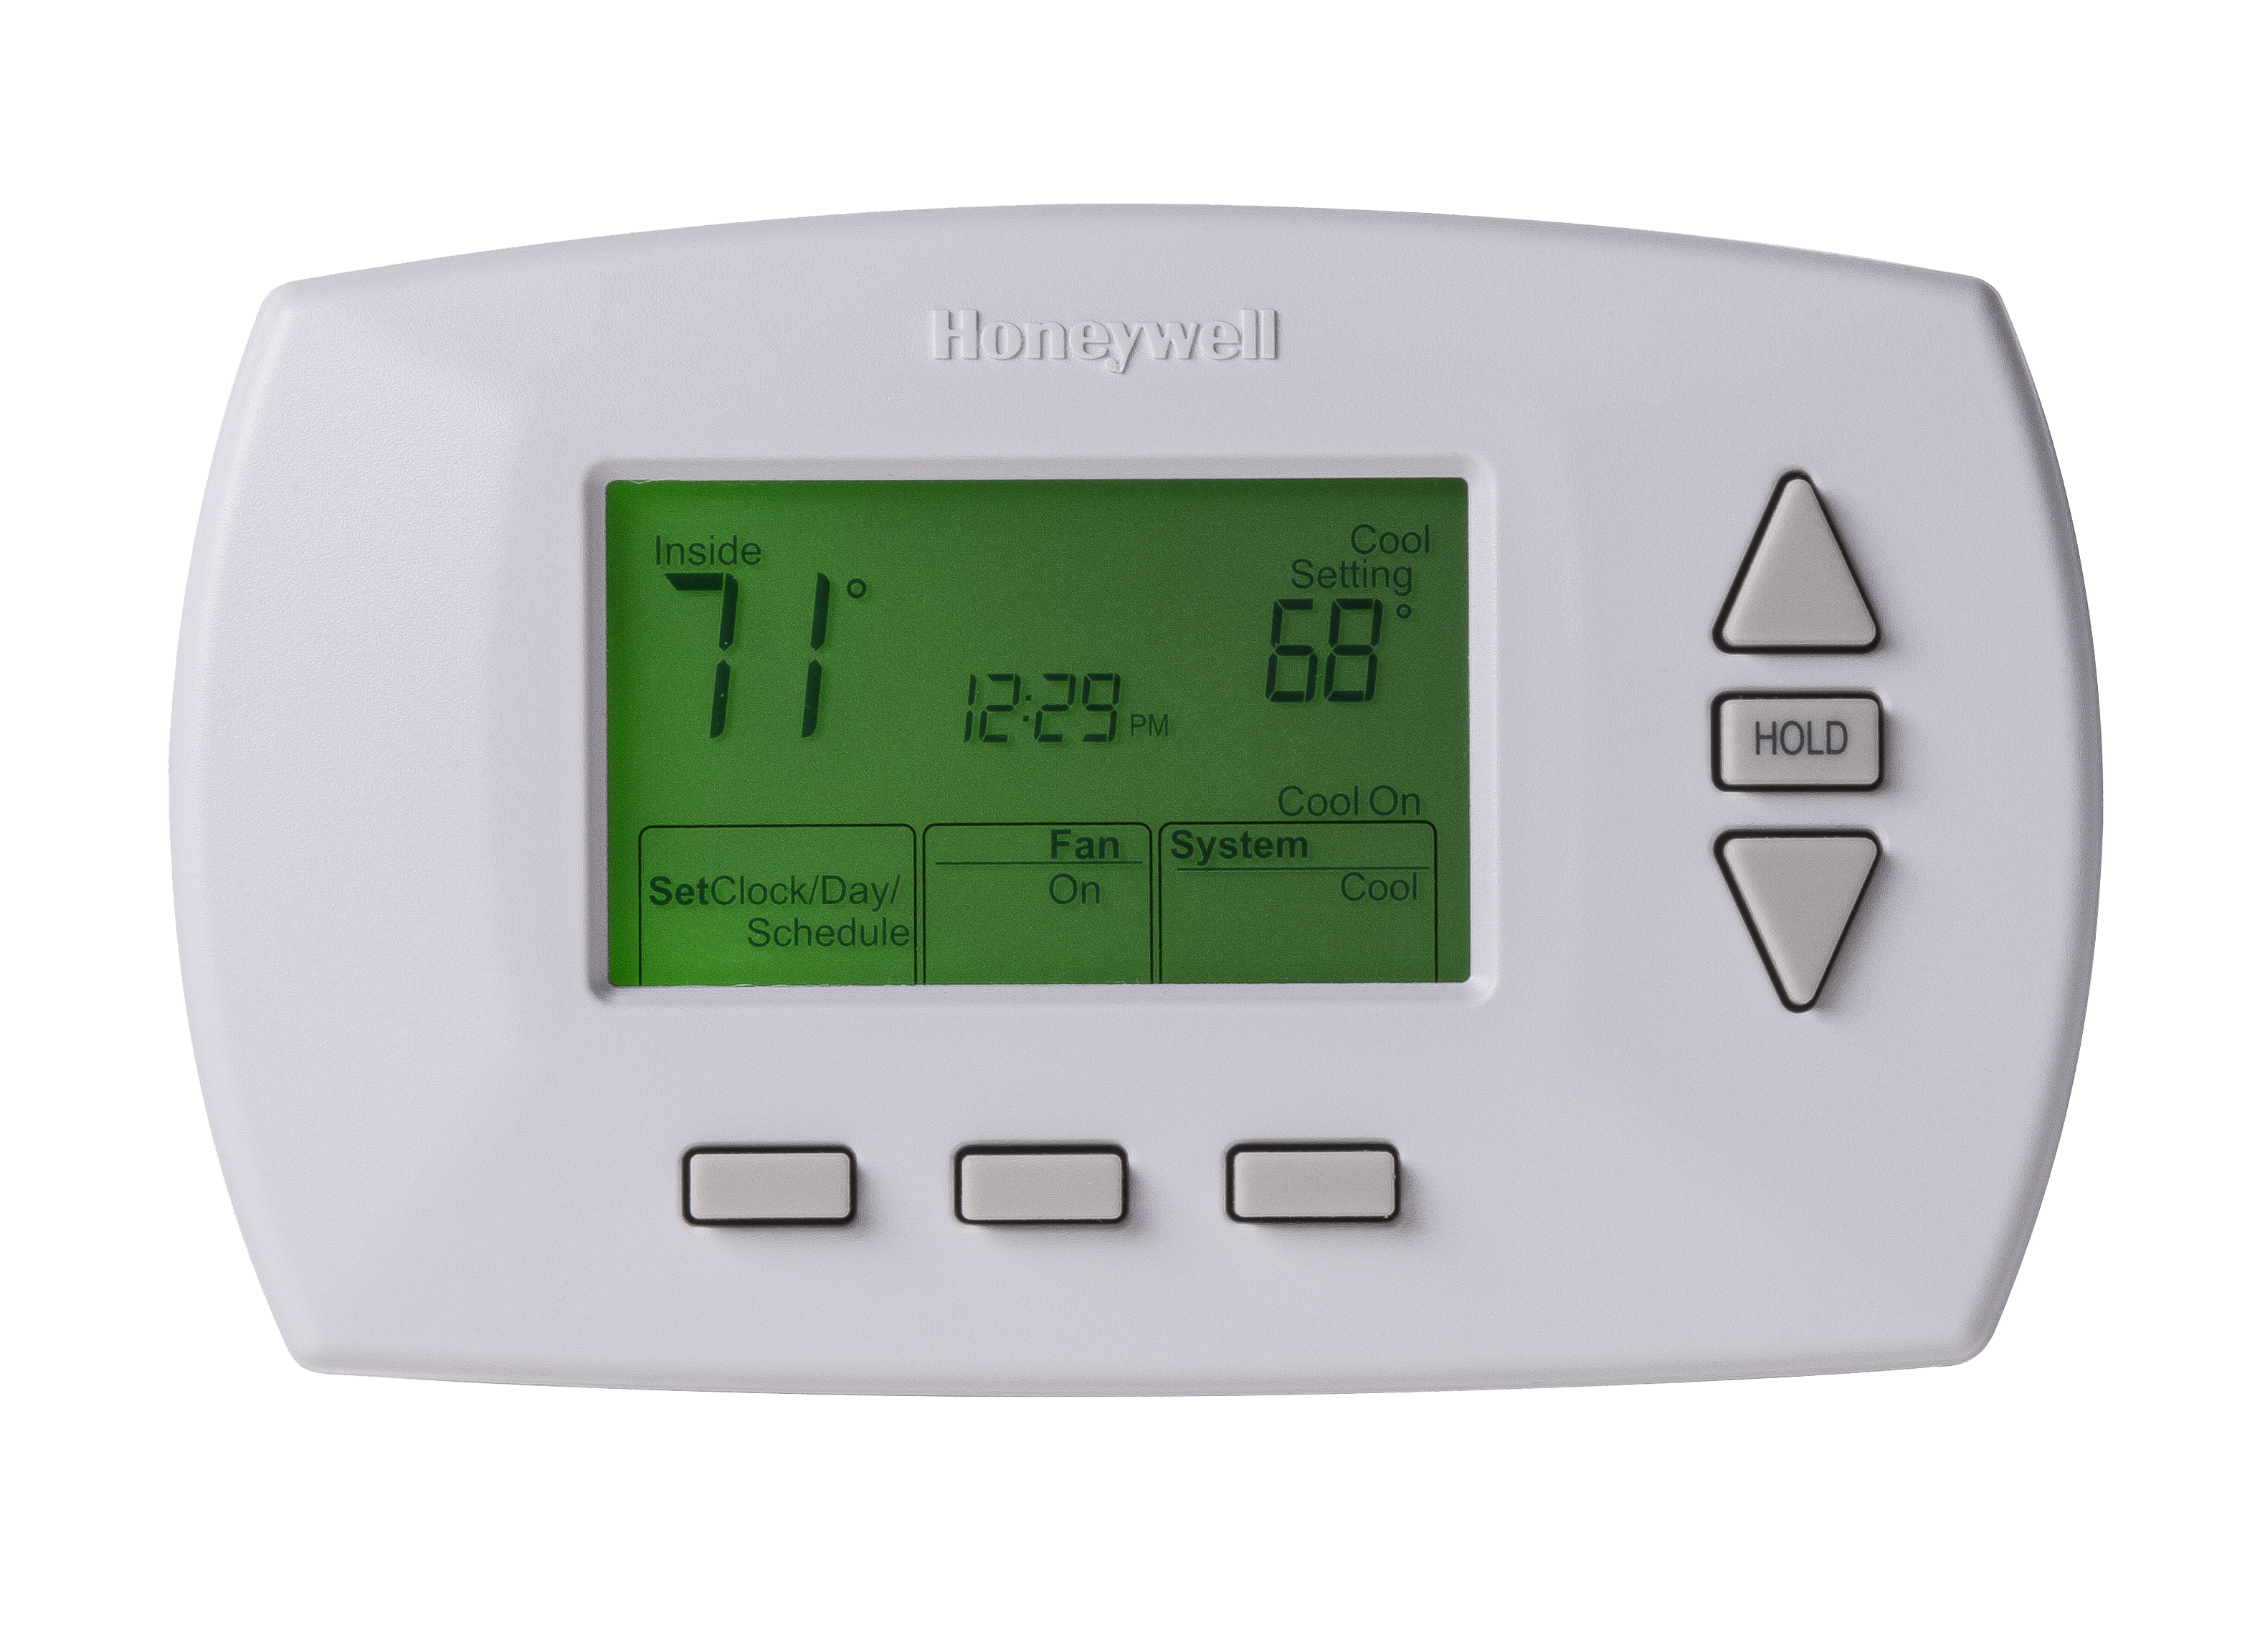 Honeywell thermostat photos older How Do